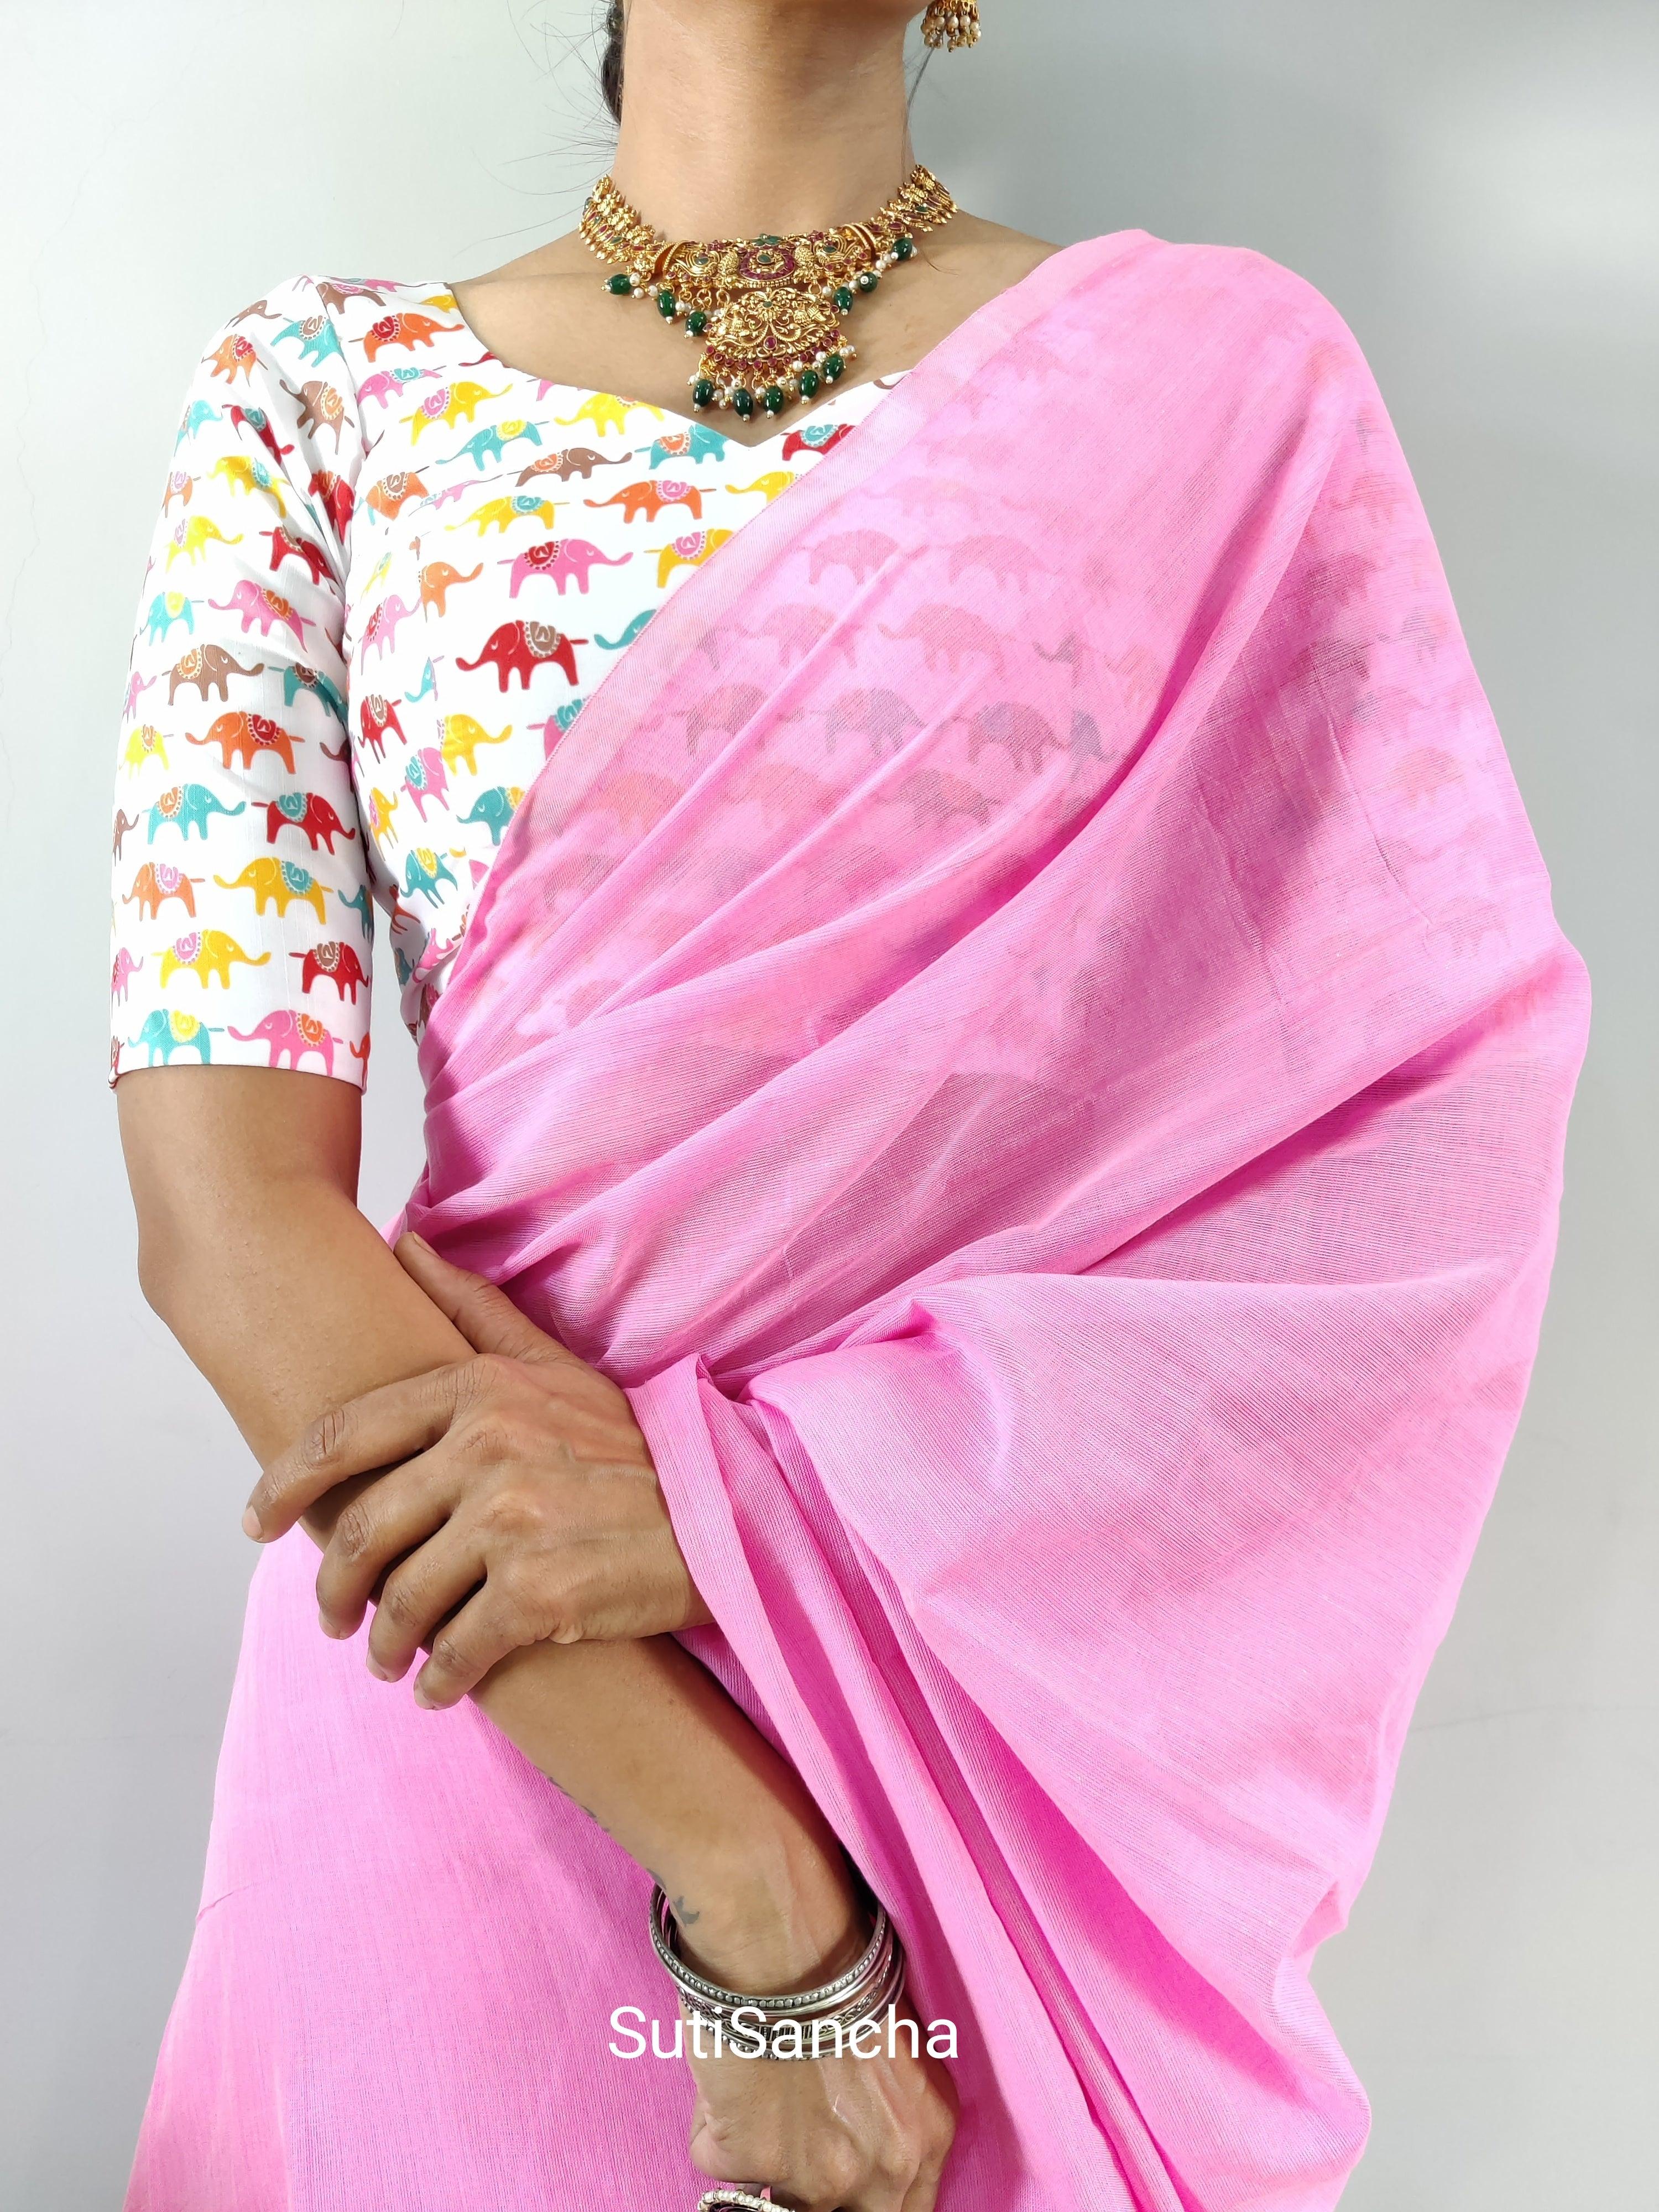 Sutisancha Babypink Khadi Saree & designer Blouse - Suti Sancha